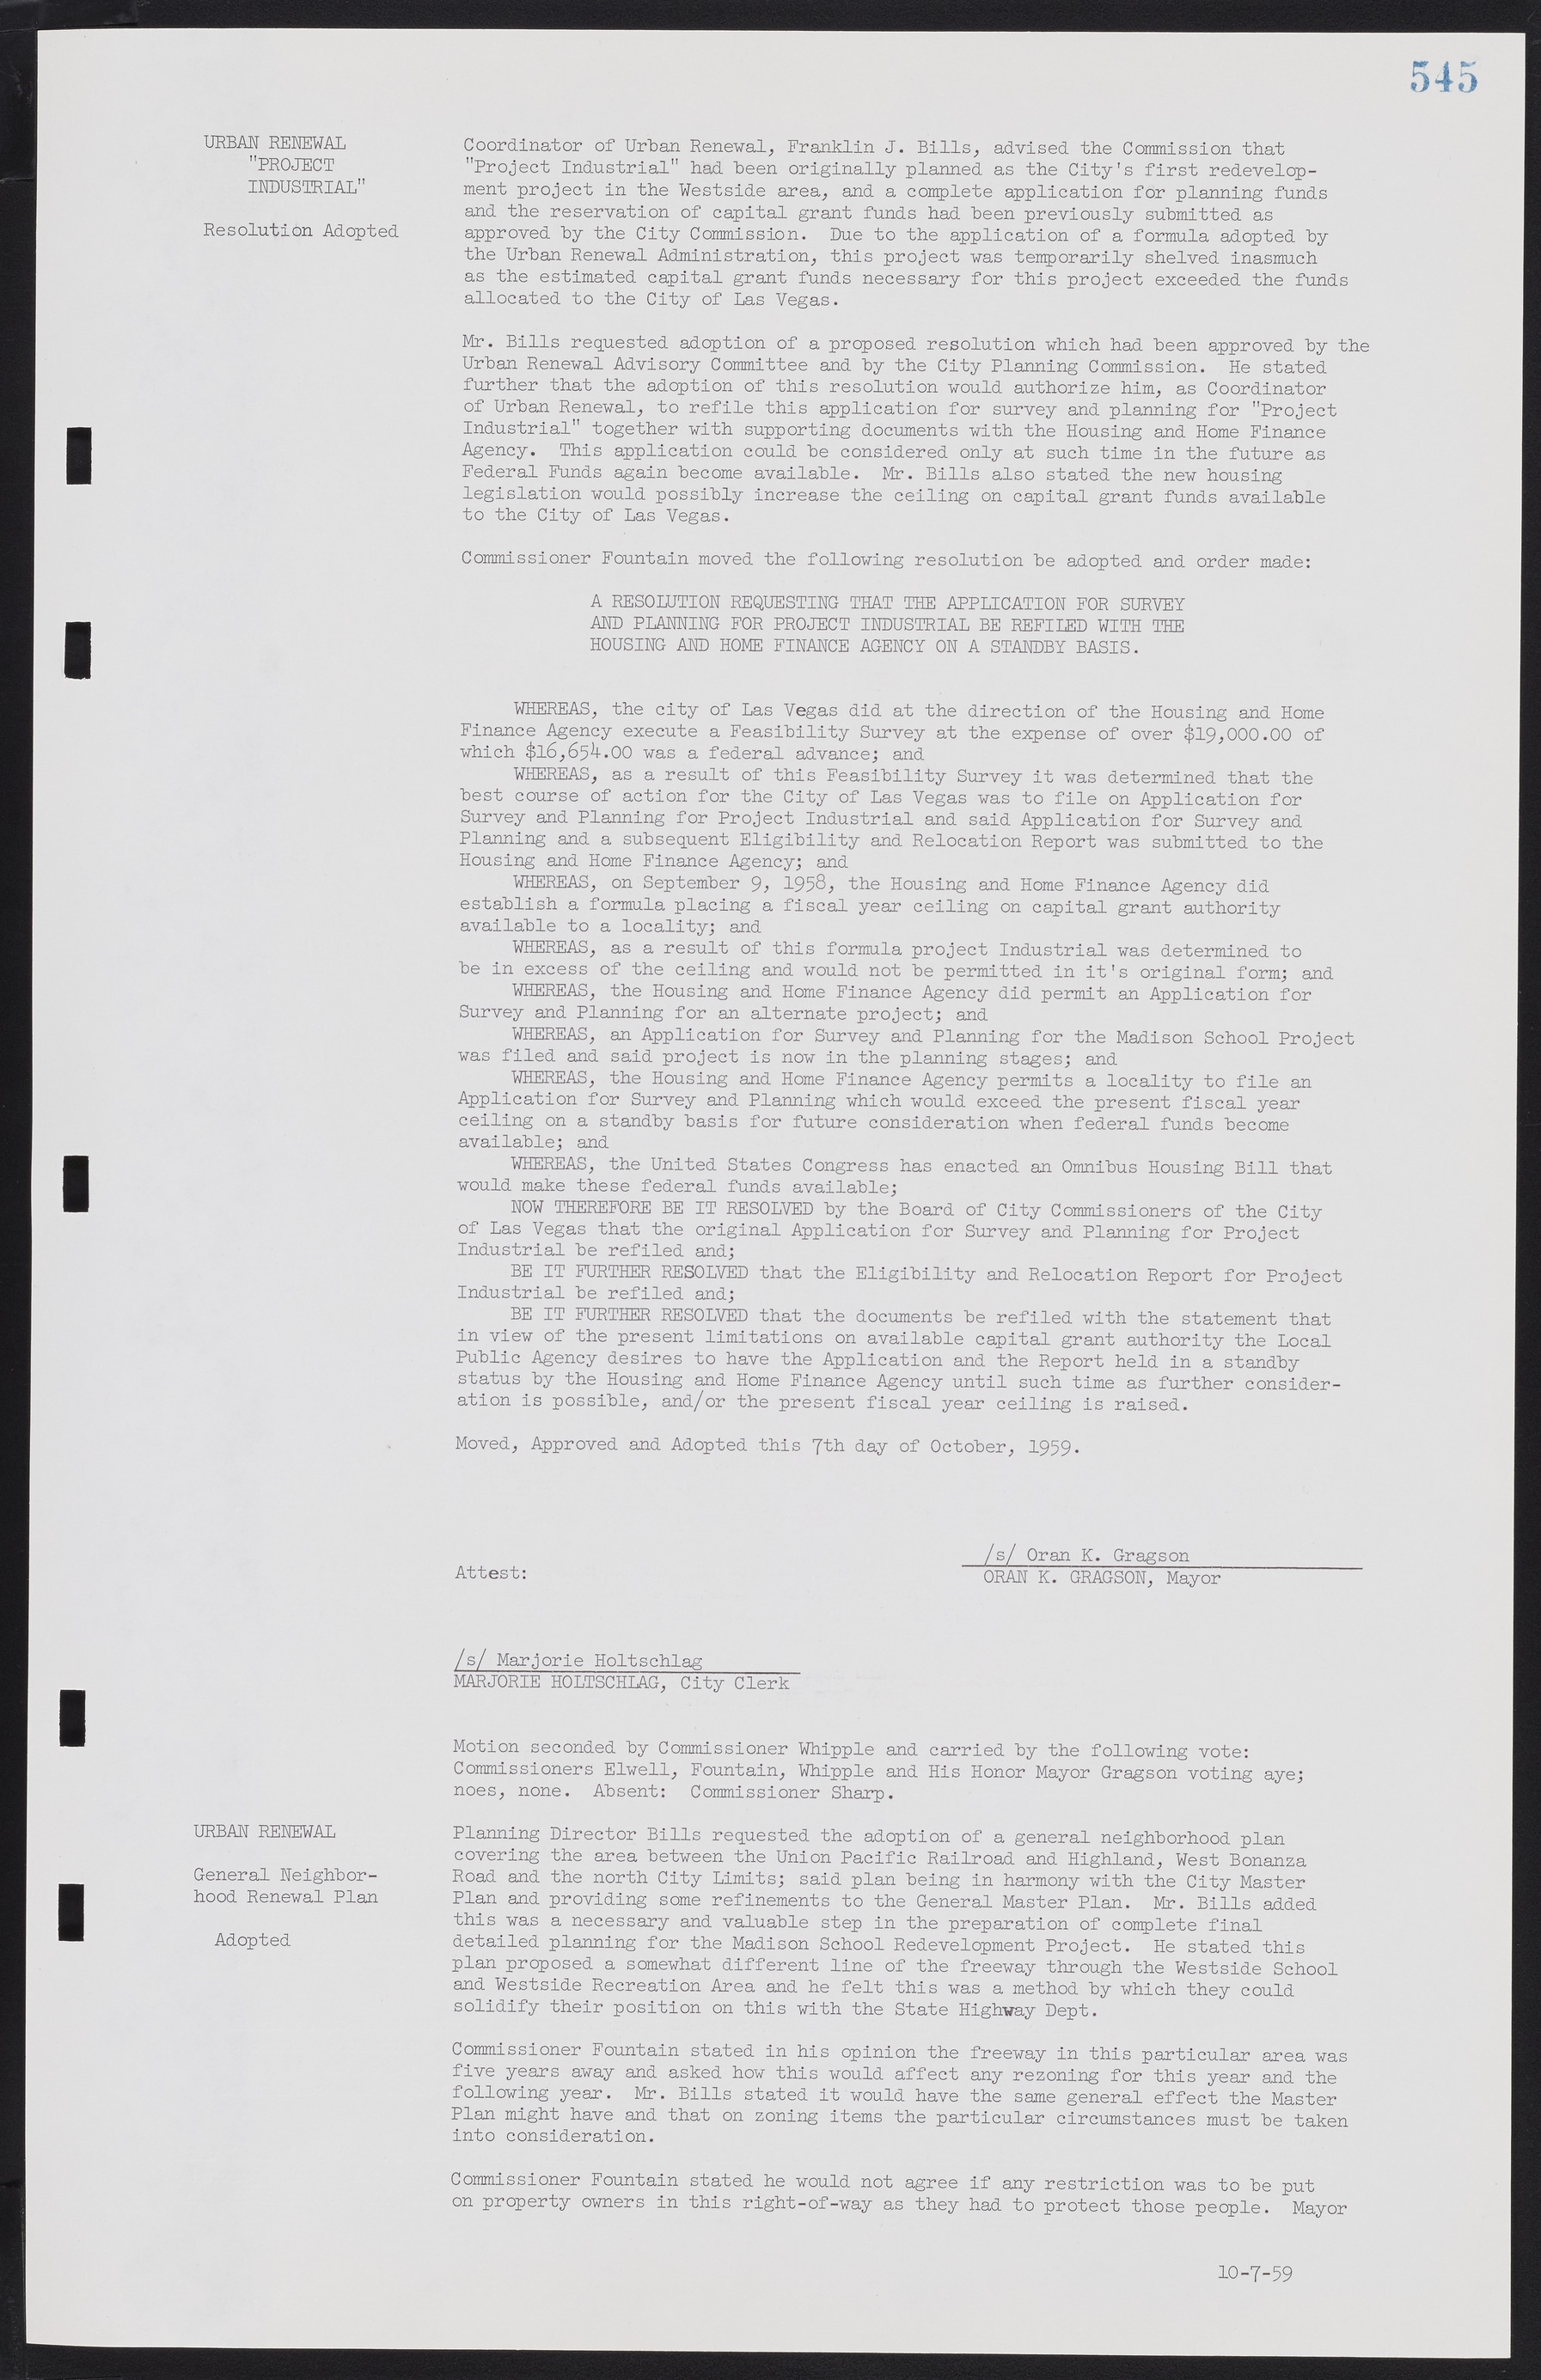 Las Vegas City Commission Minutes, November 20, 1957 to December 2, 1959, lvc000011-581